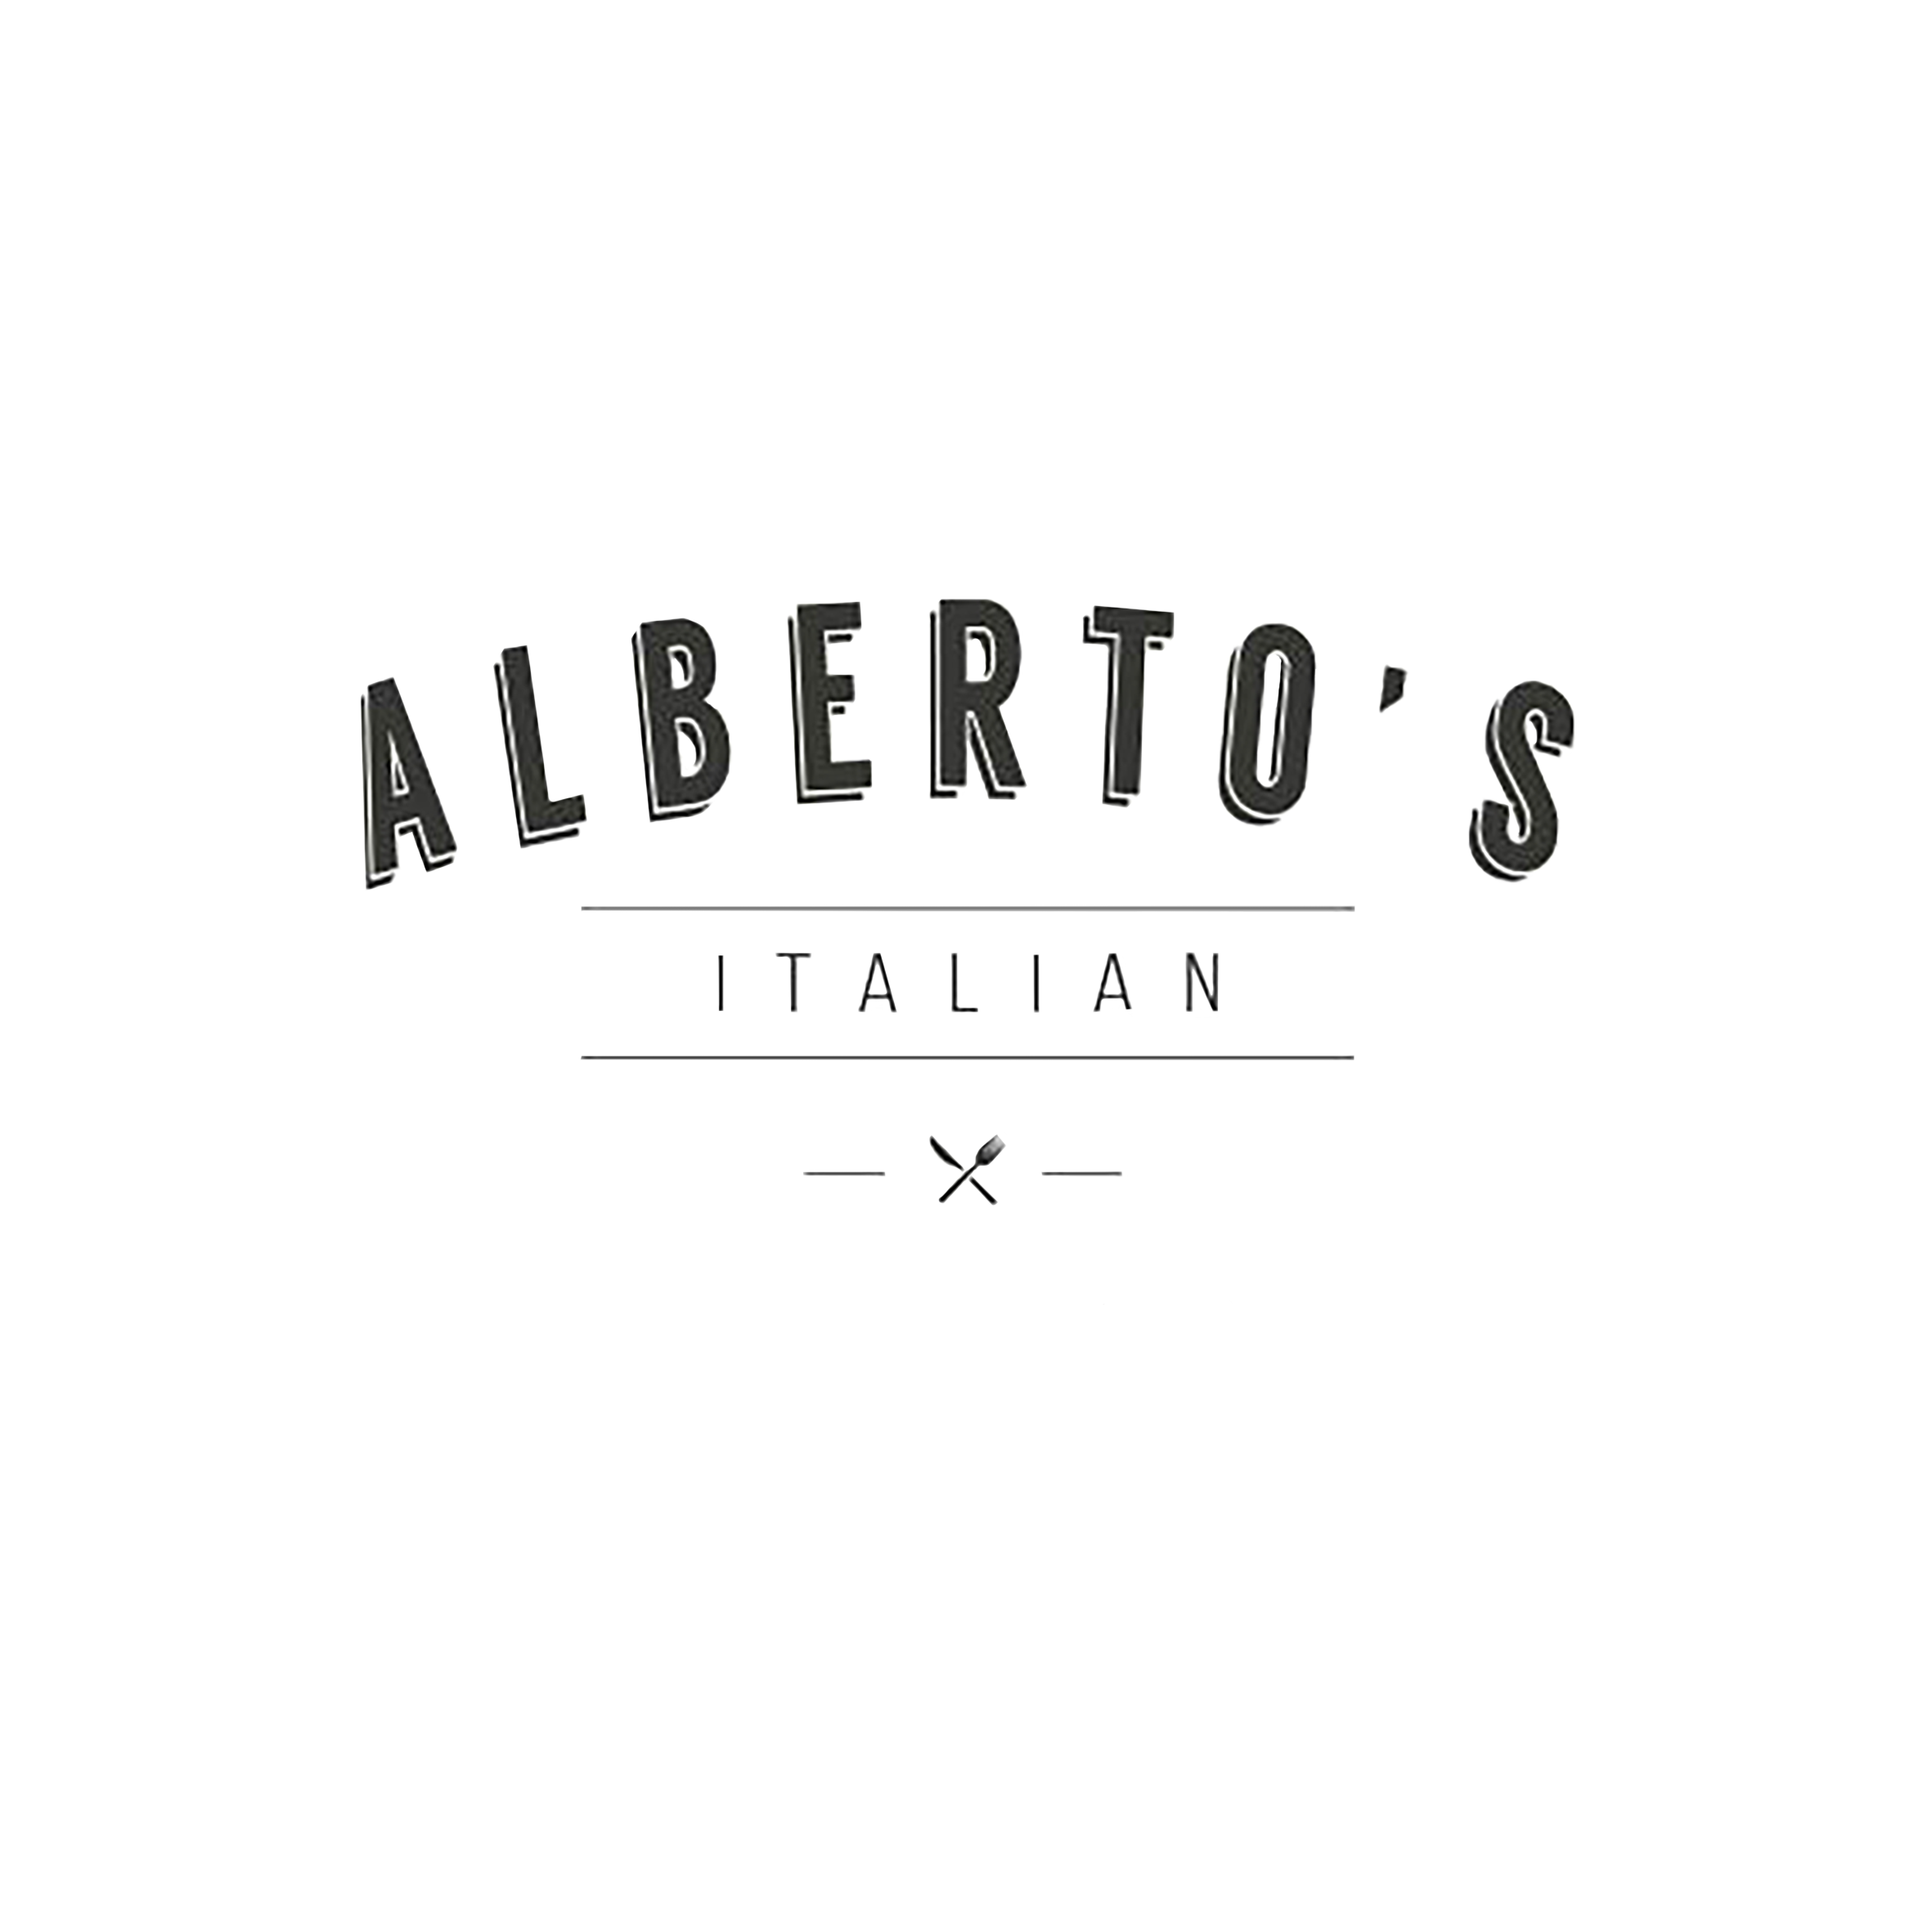 Eventplanning for you, partners, Alberto's Italian